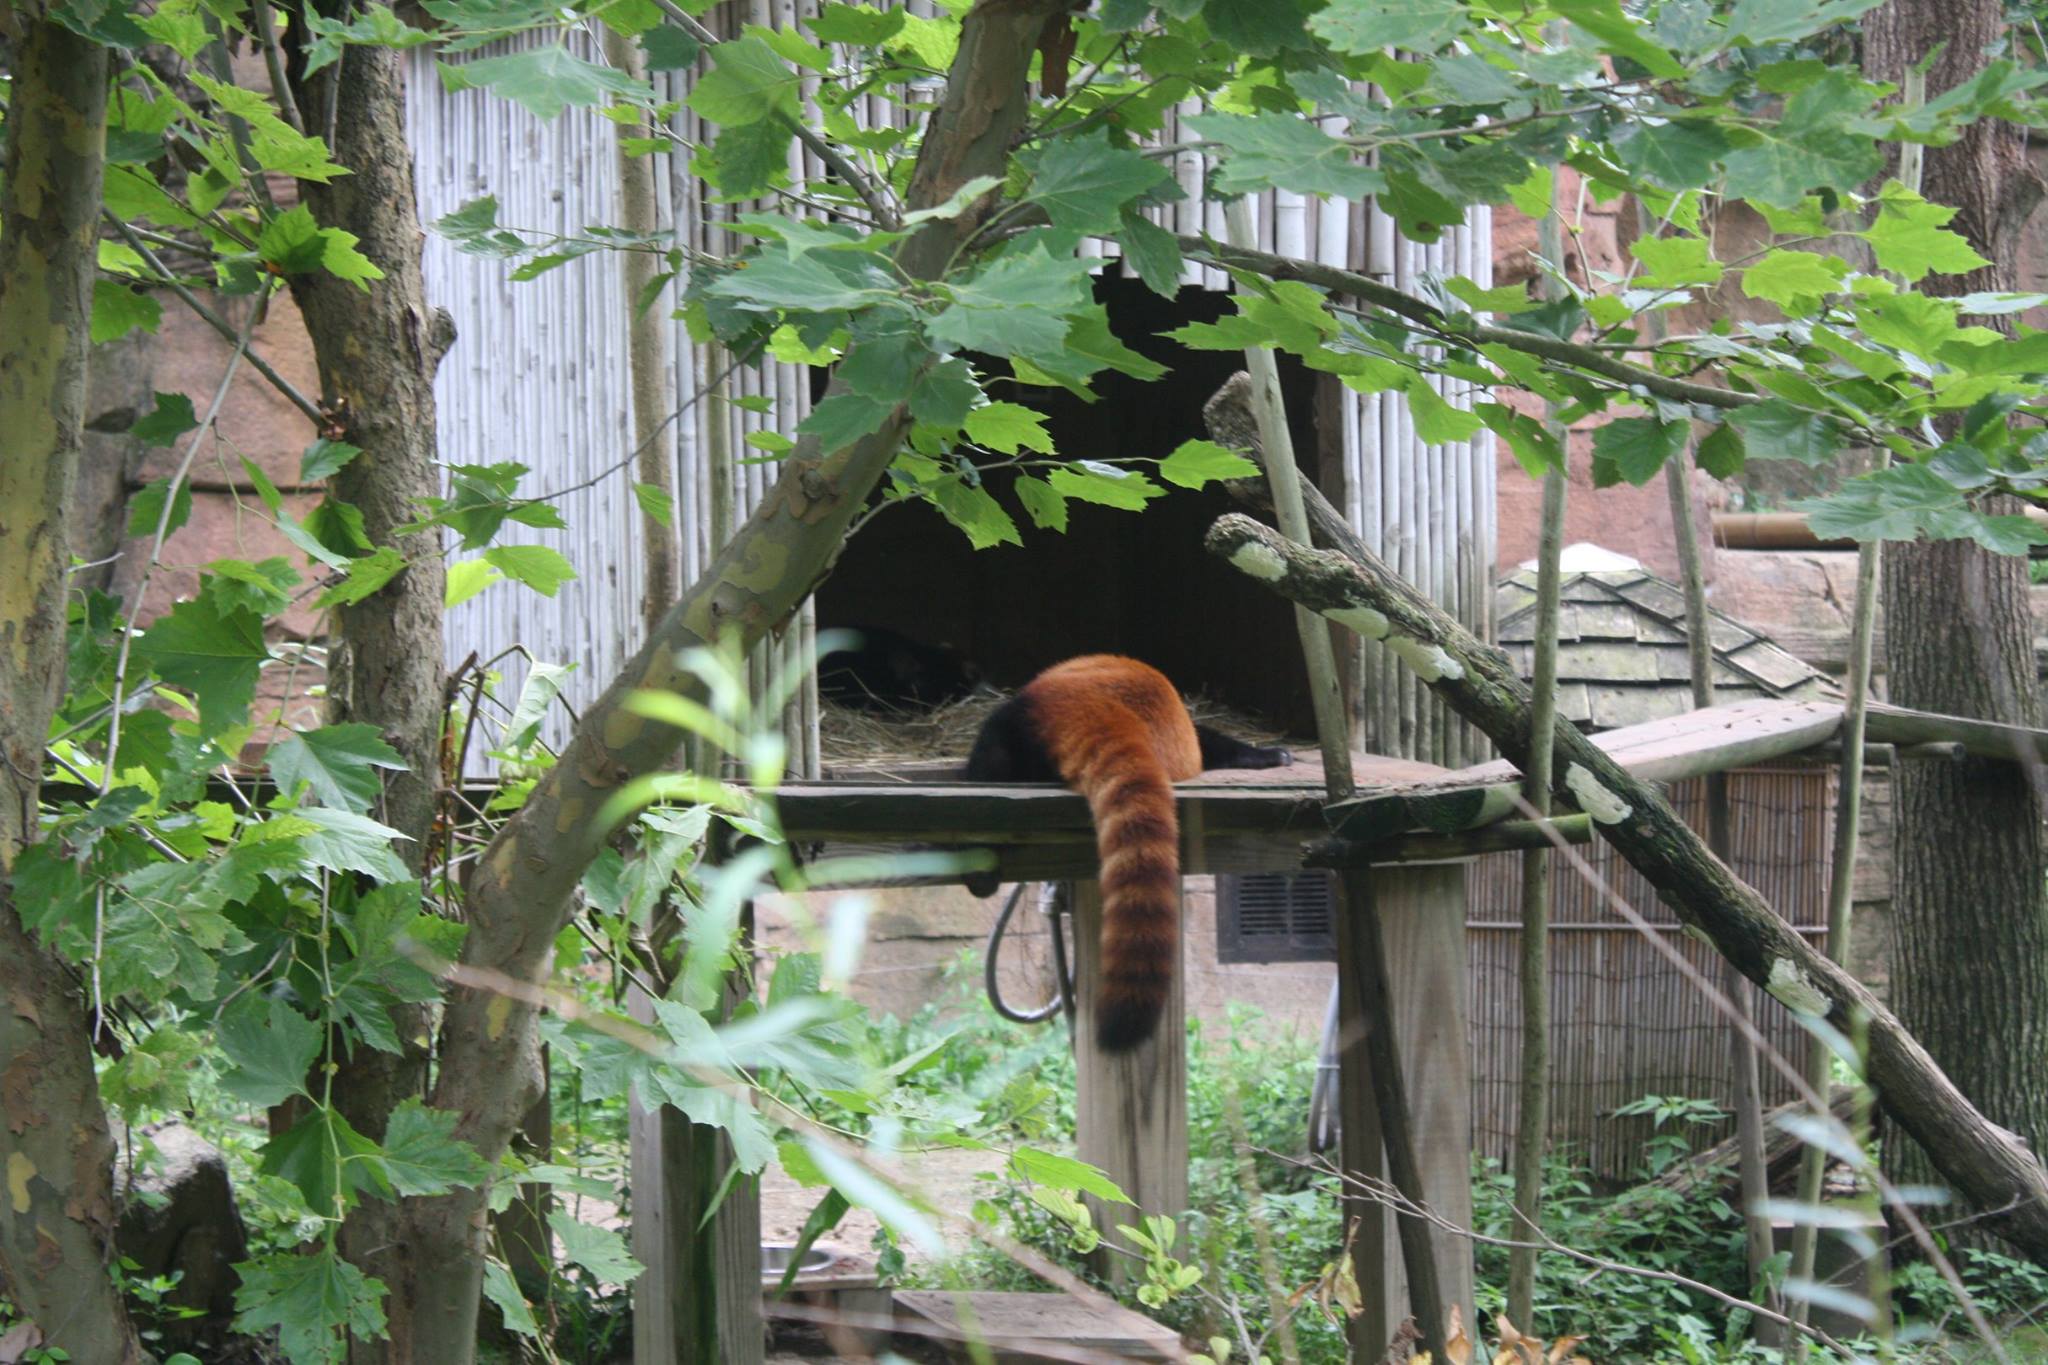 Red panda at Columbus zoo